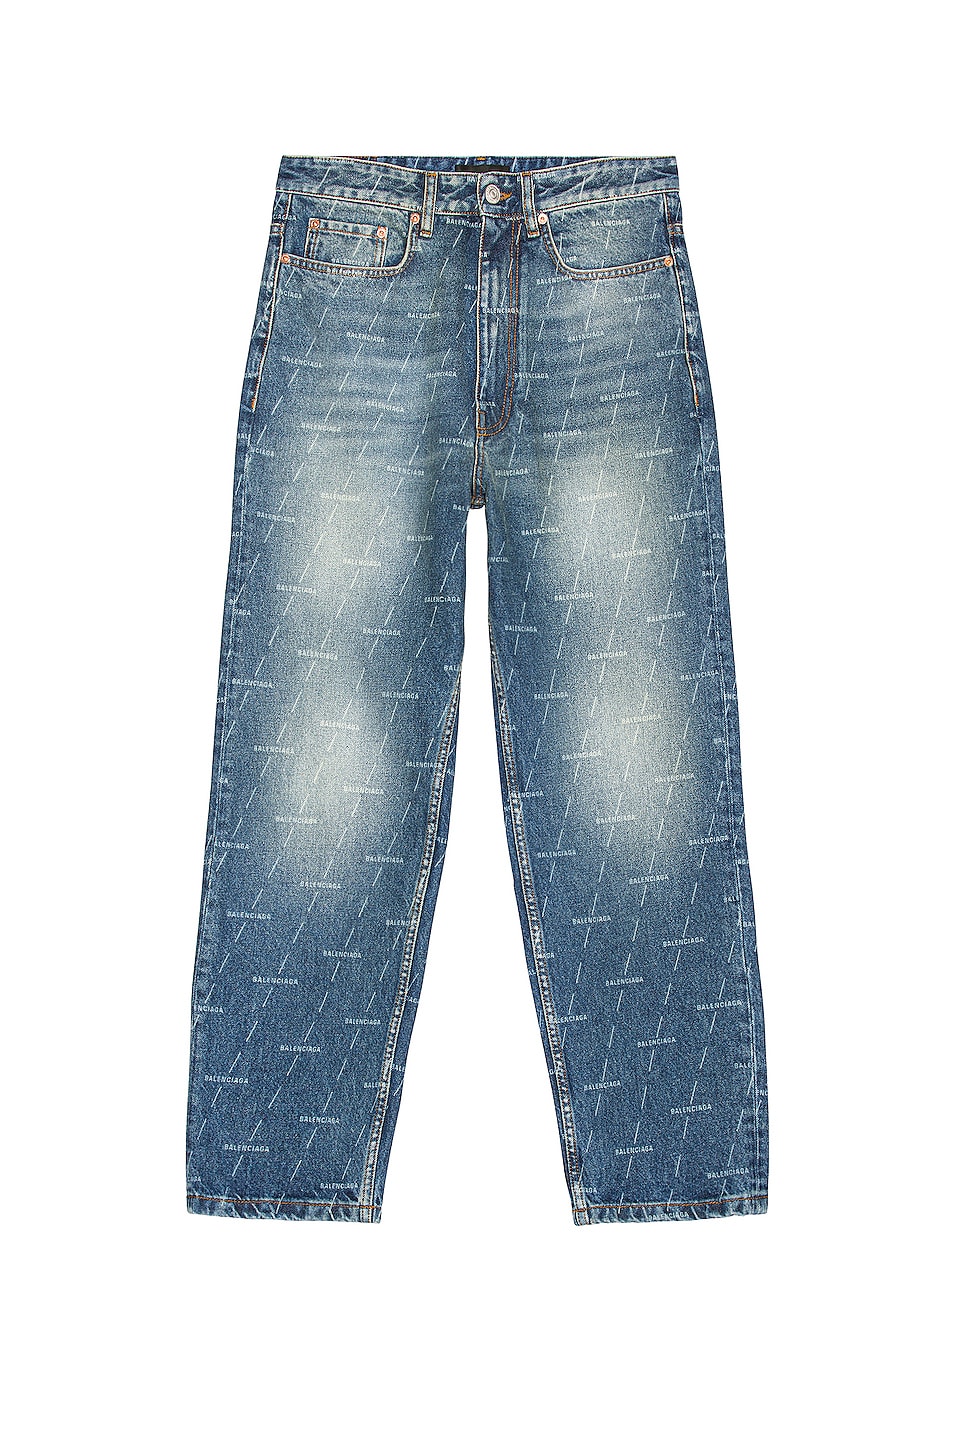 Balenciaga Regular Fit Jeans in Authentic Dark Blue | FWRD